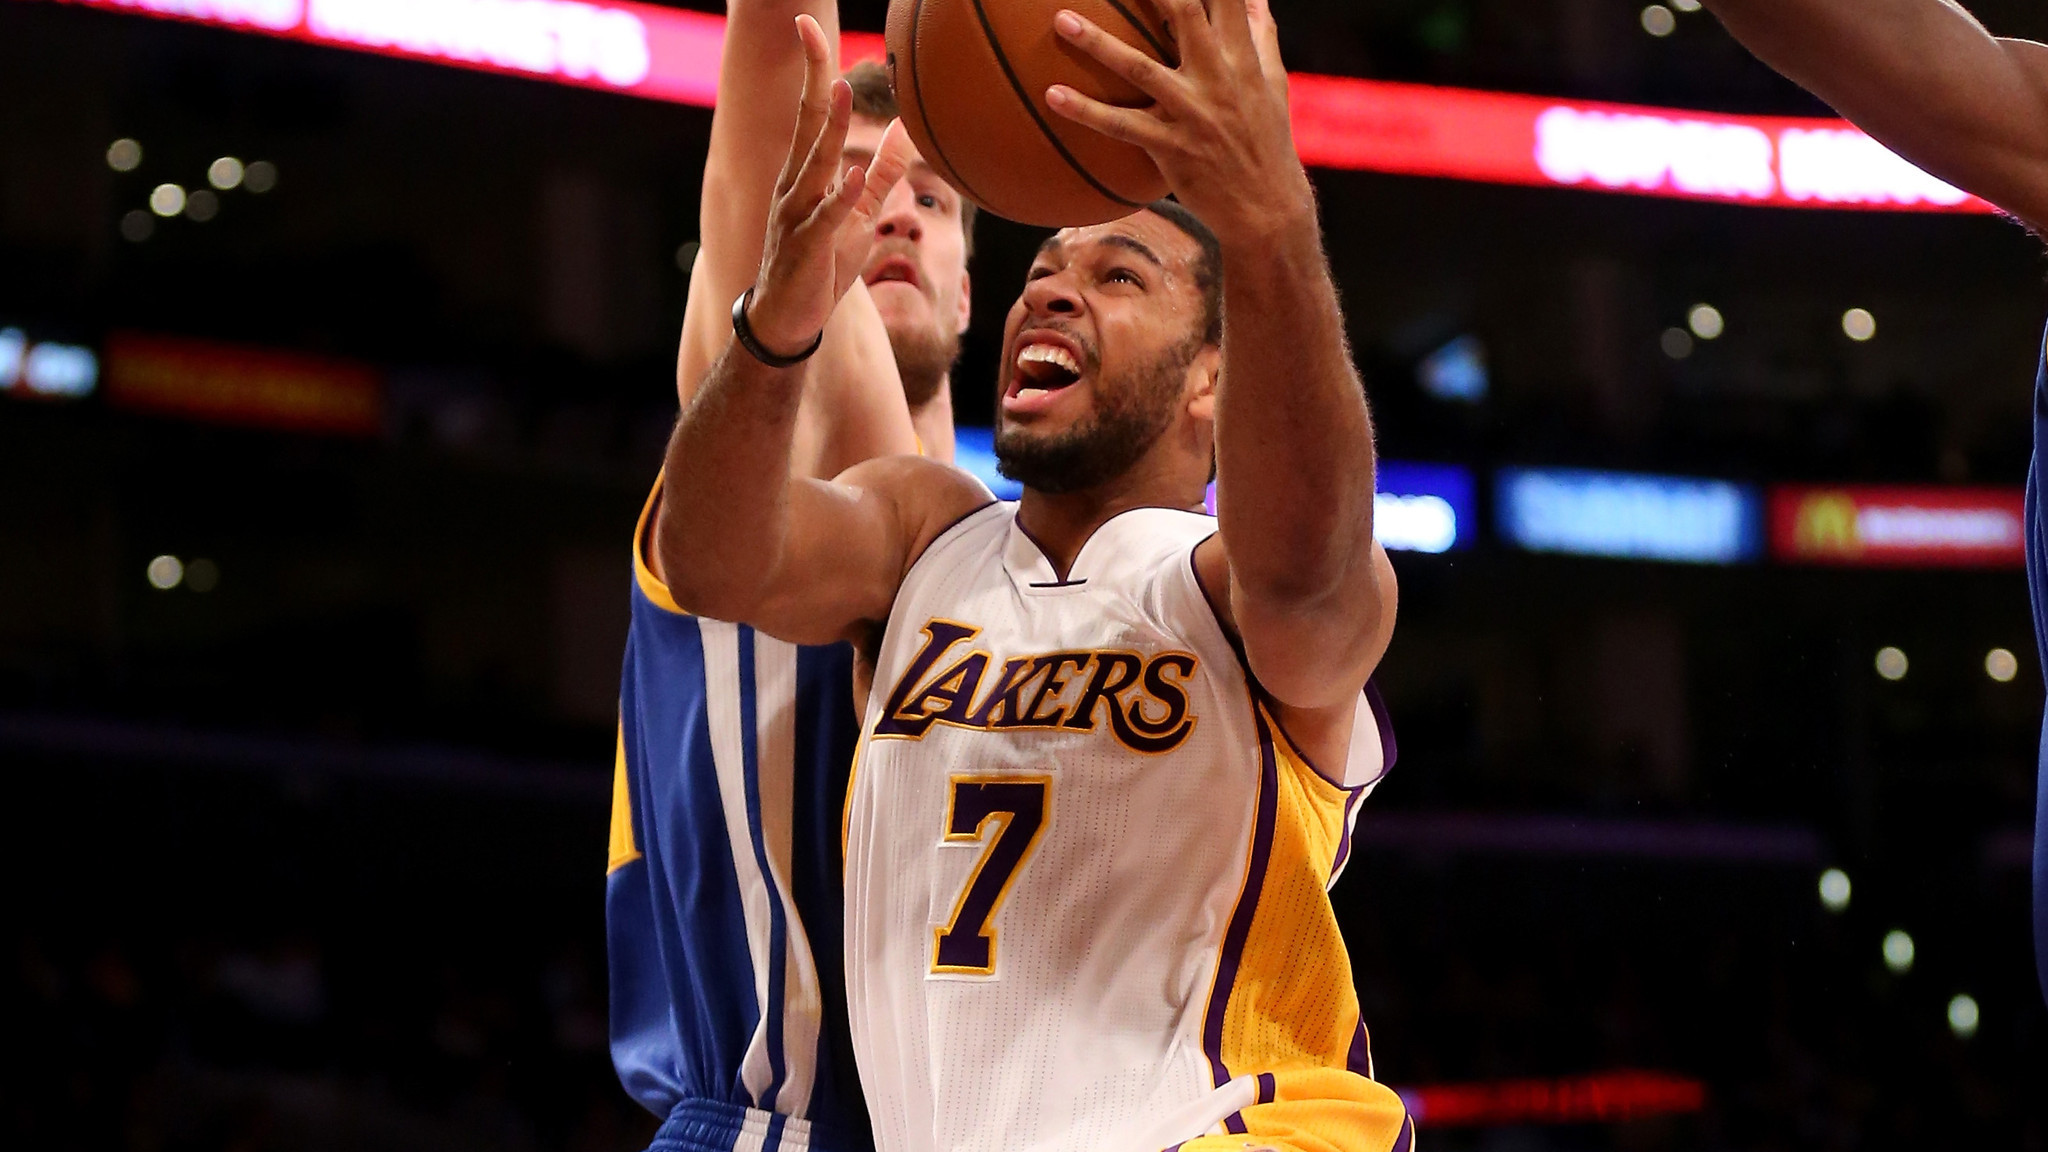 Lakers' Xavier Henry tears Achilles' tendon in practice - LA Times2048 x 1152